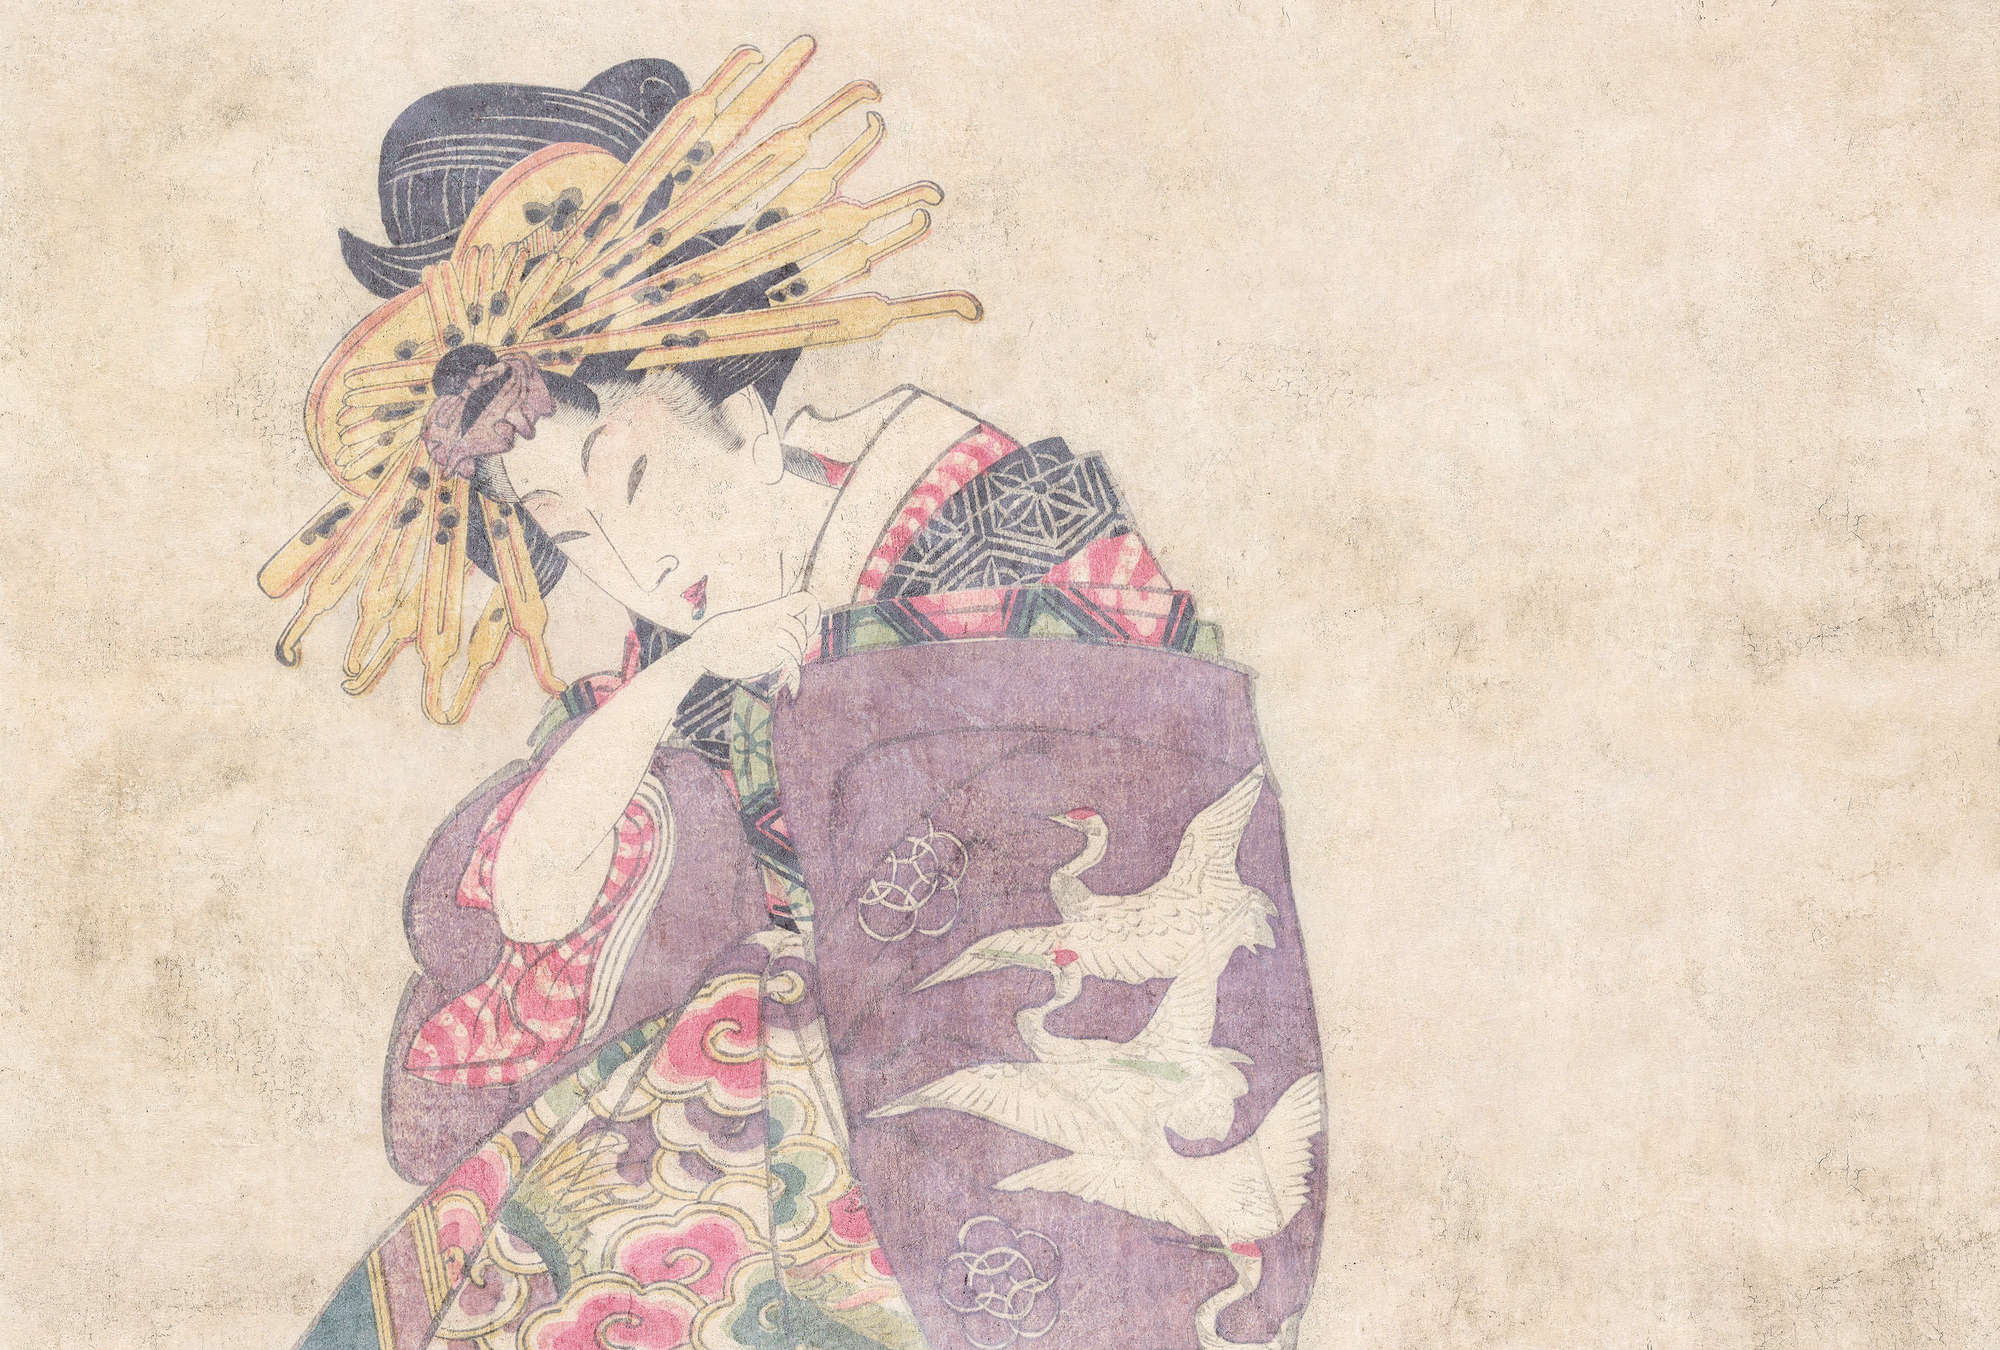             Osaka 1 - Art Print Vintage Aziatisch Decor Behang
        